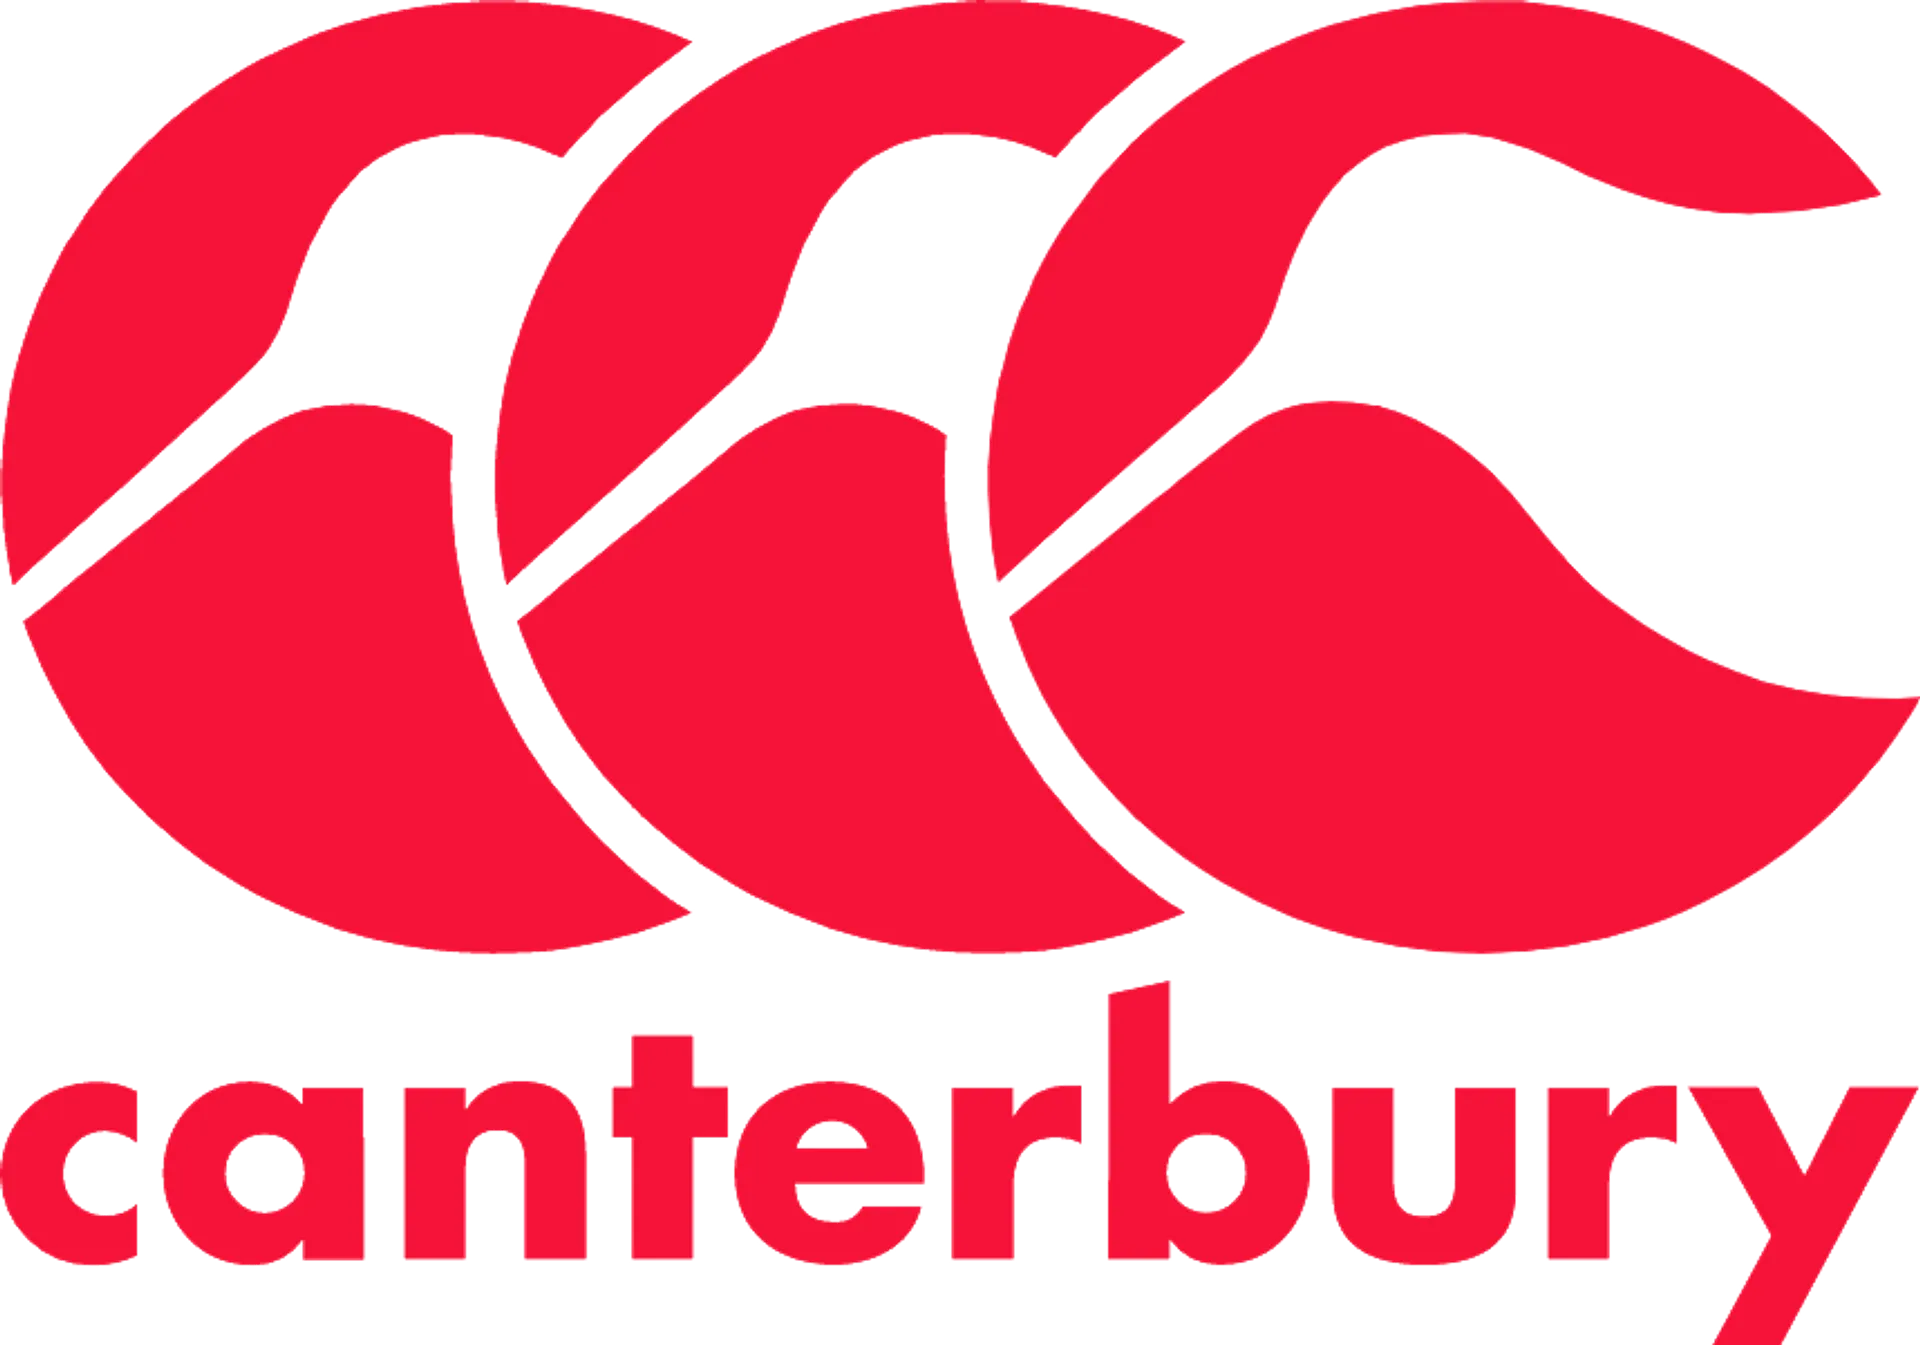  CANTERBURY logo